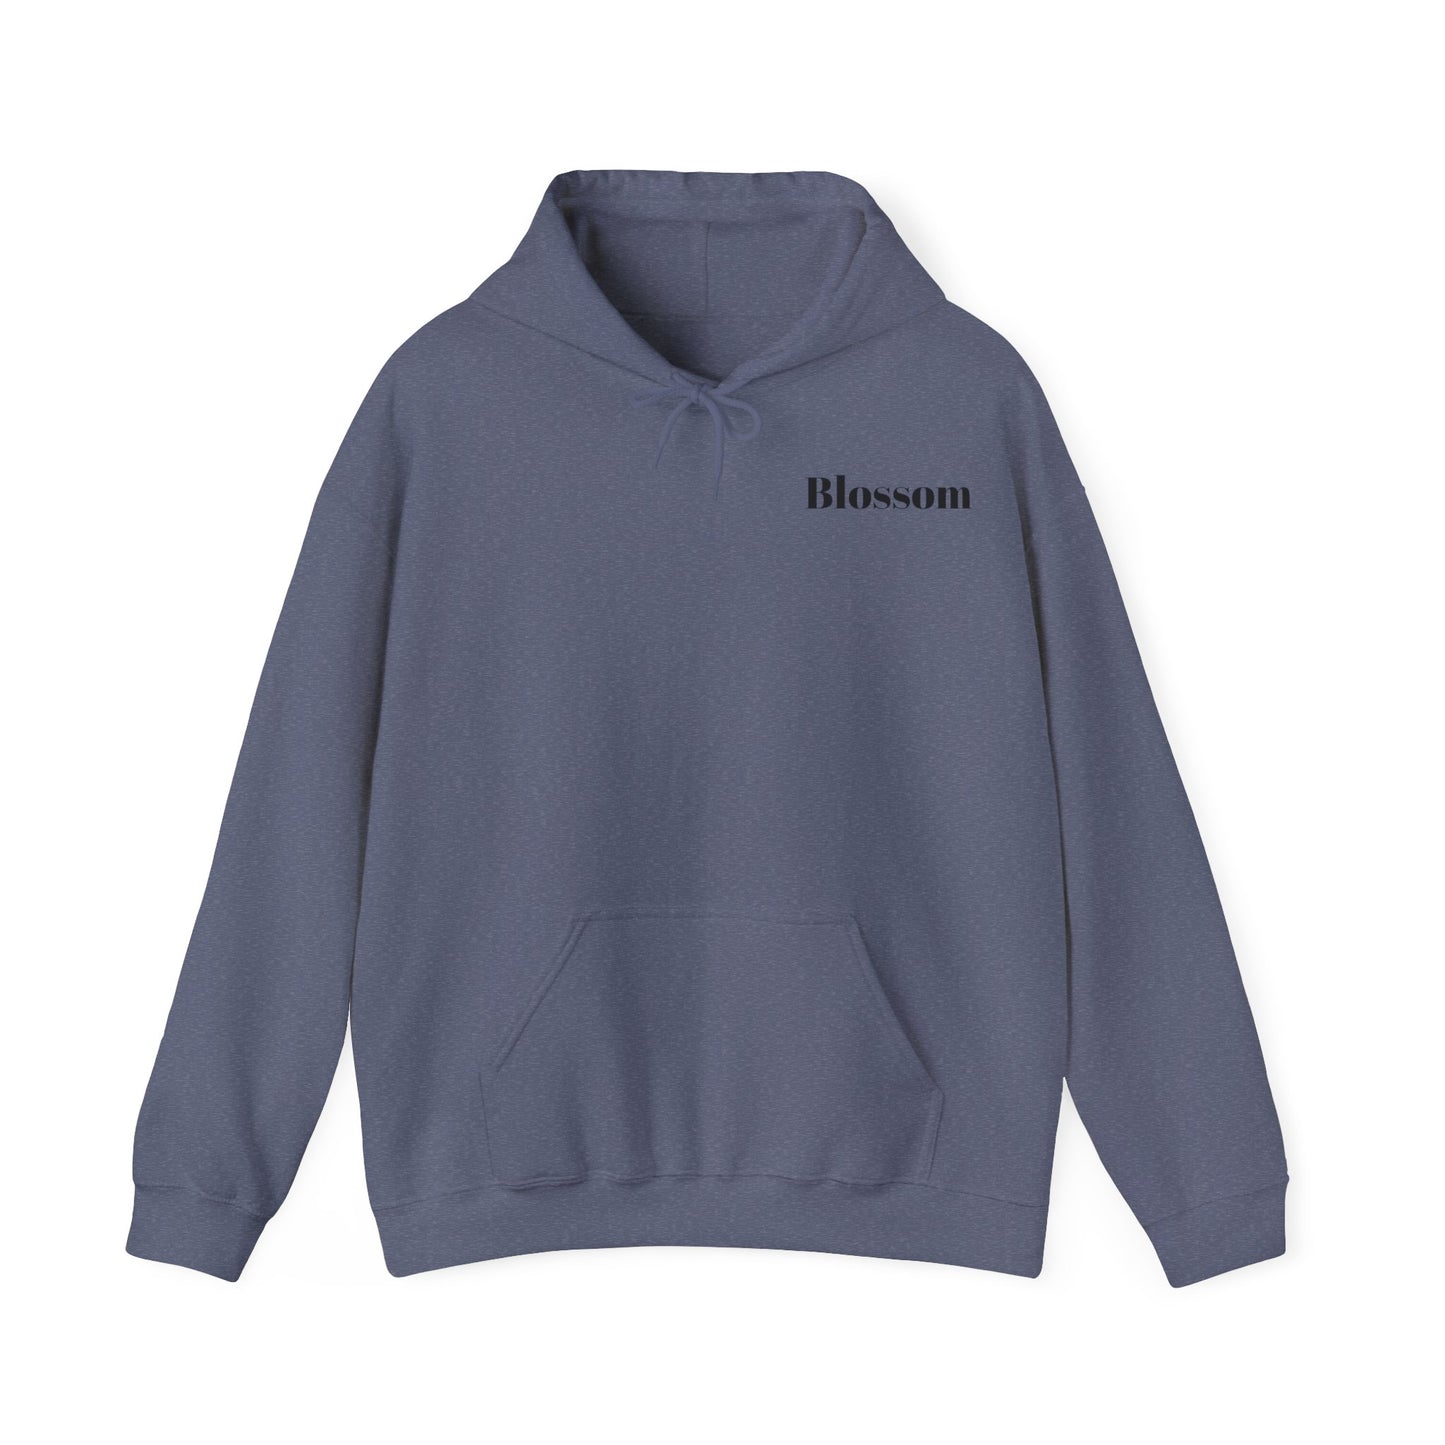 Blossom Unisex Hooded Sweatshirt with Heavy Blend Fabric17